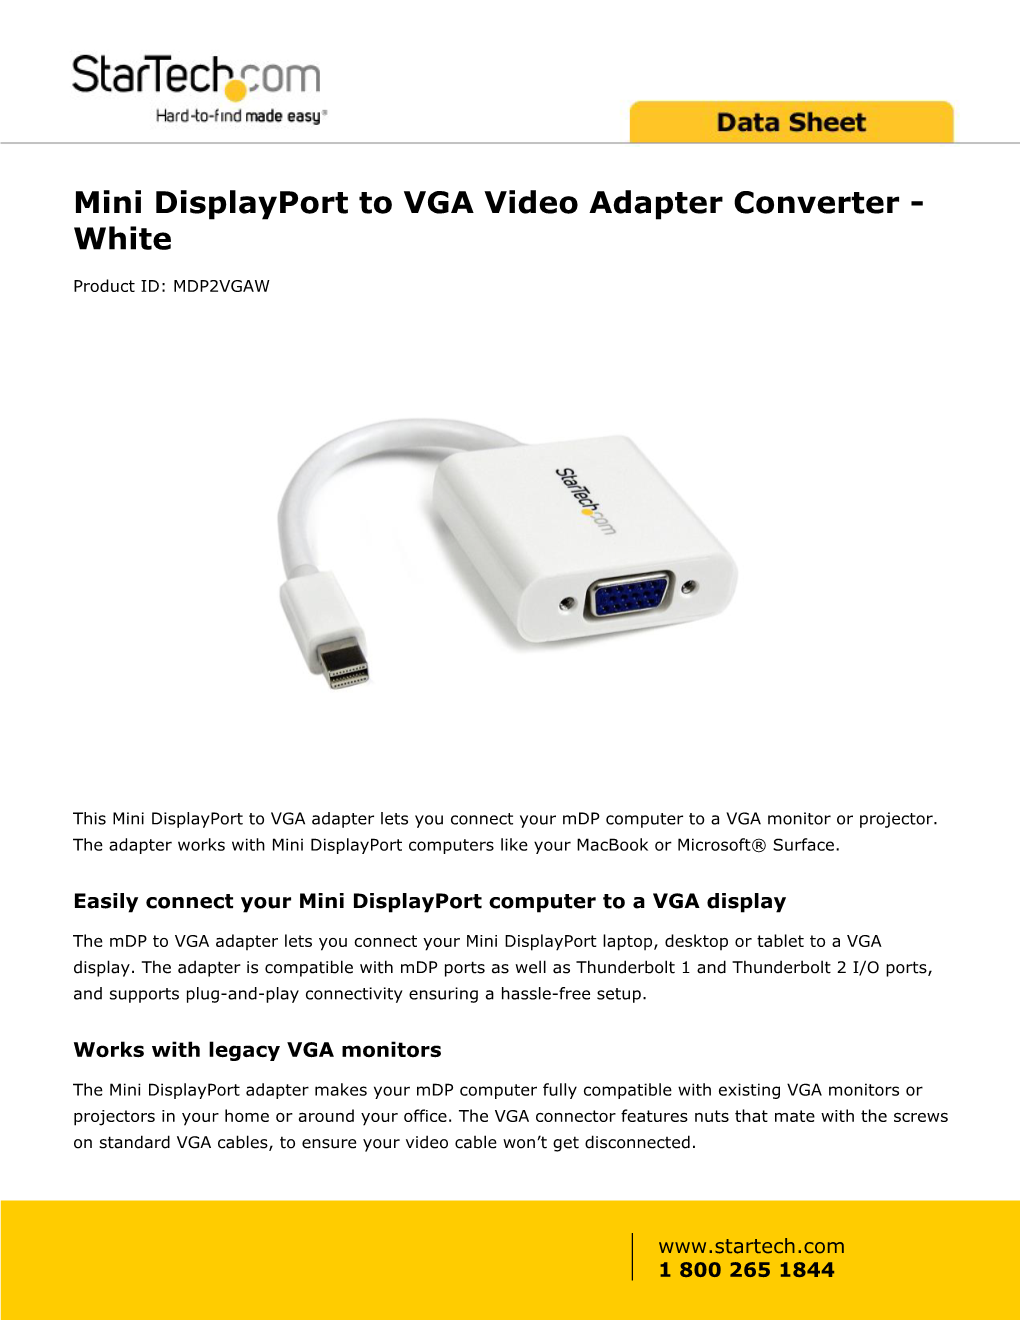 Mini Displayport to VGA Video Adapter Converter - White